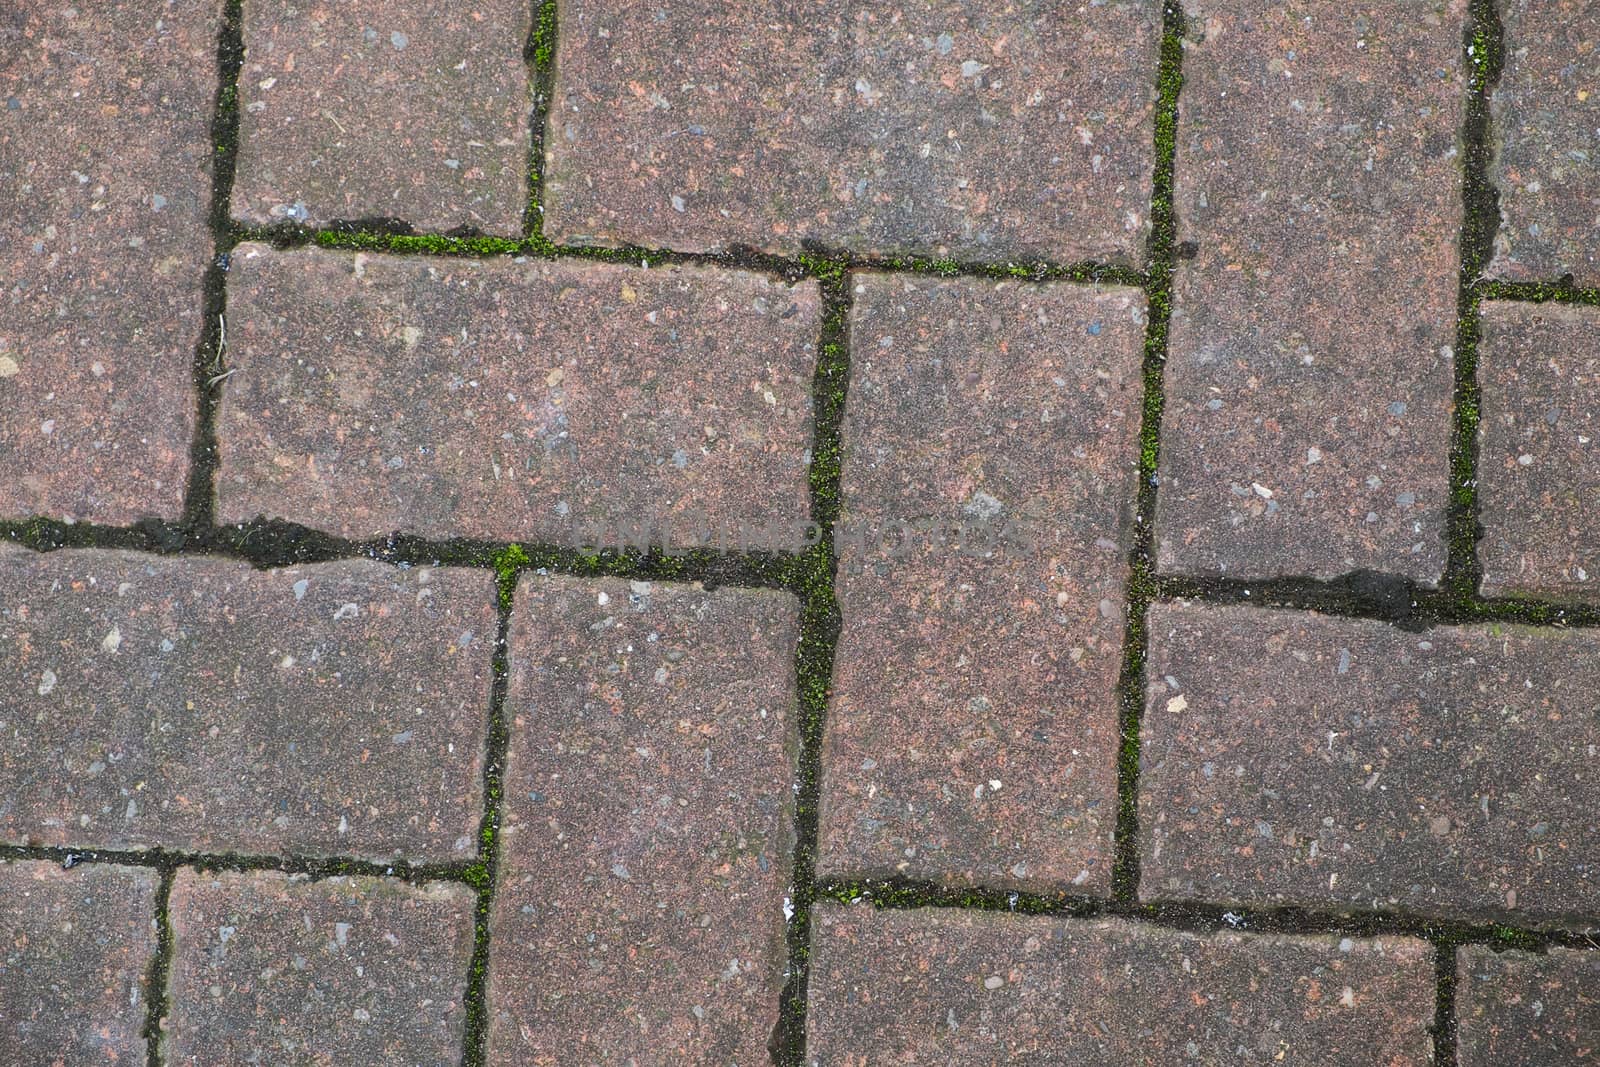 block paving with green moss growing between bricks